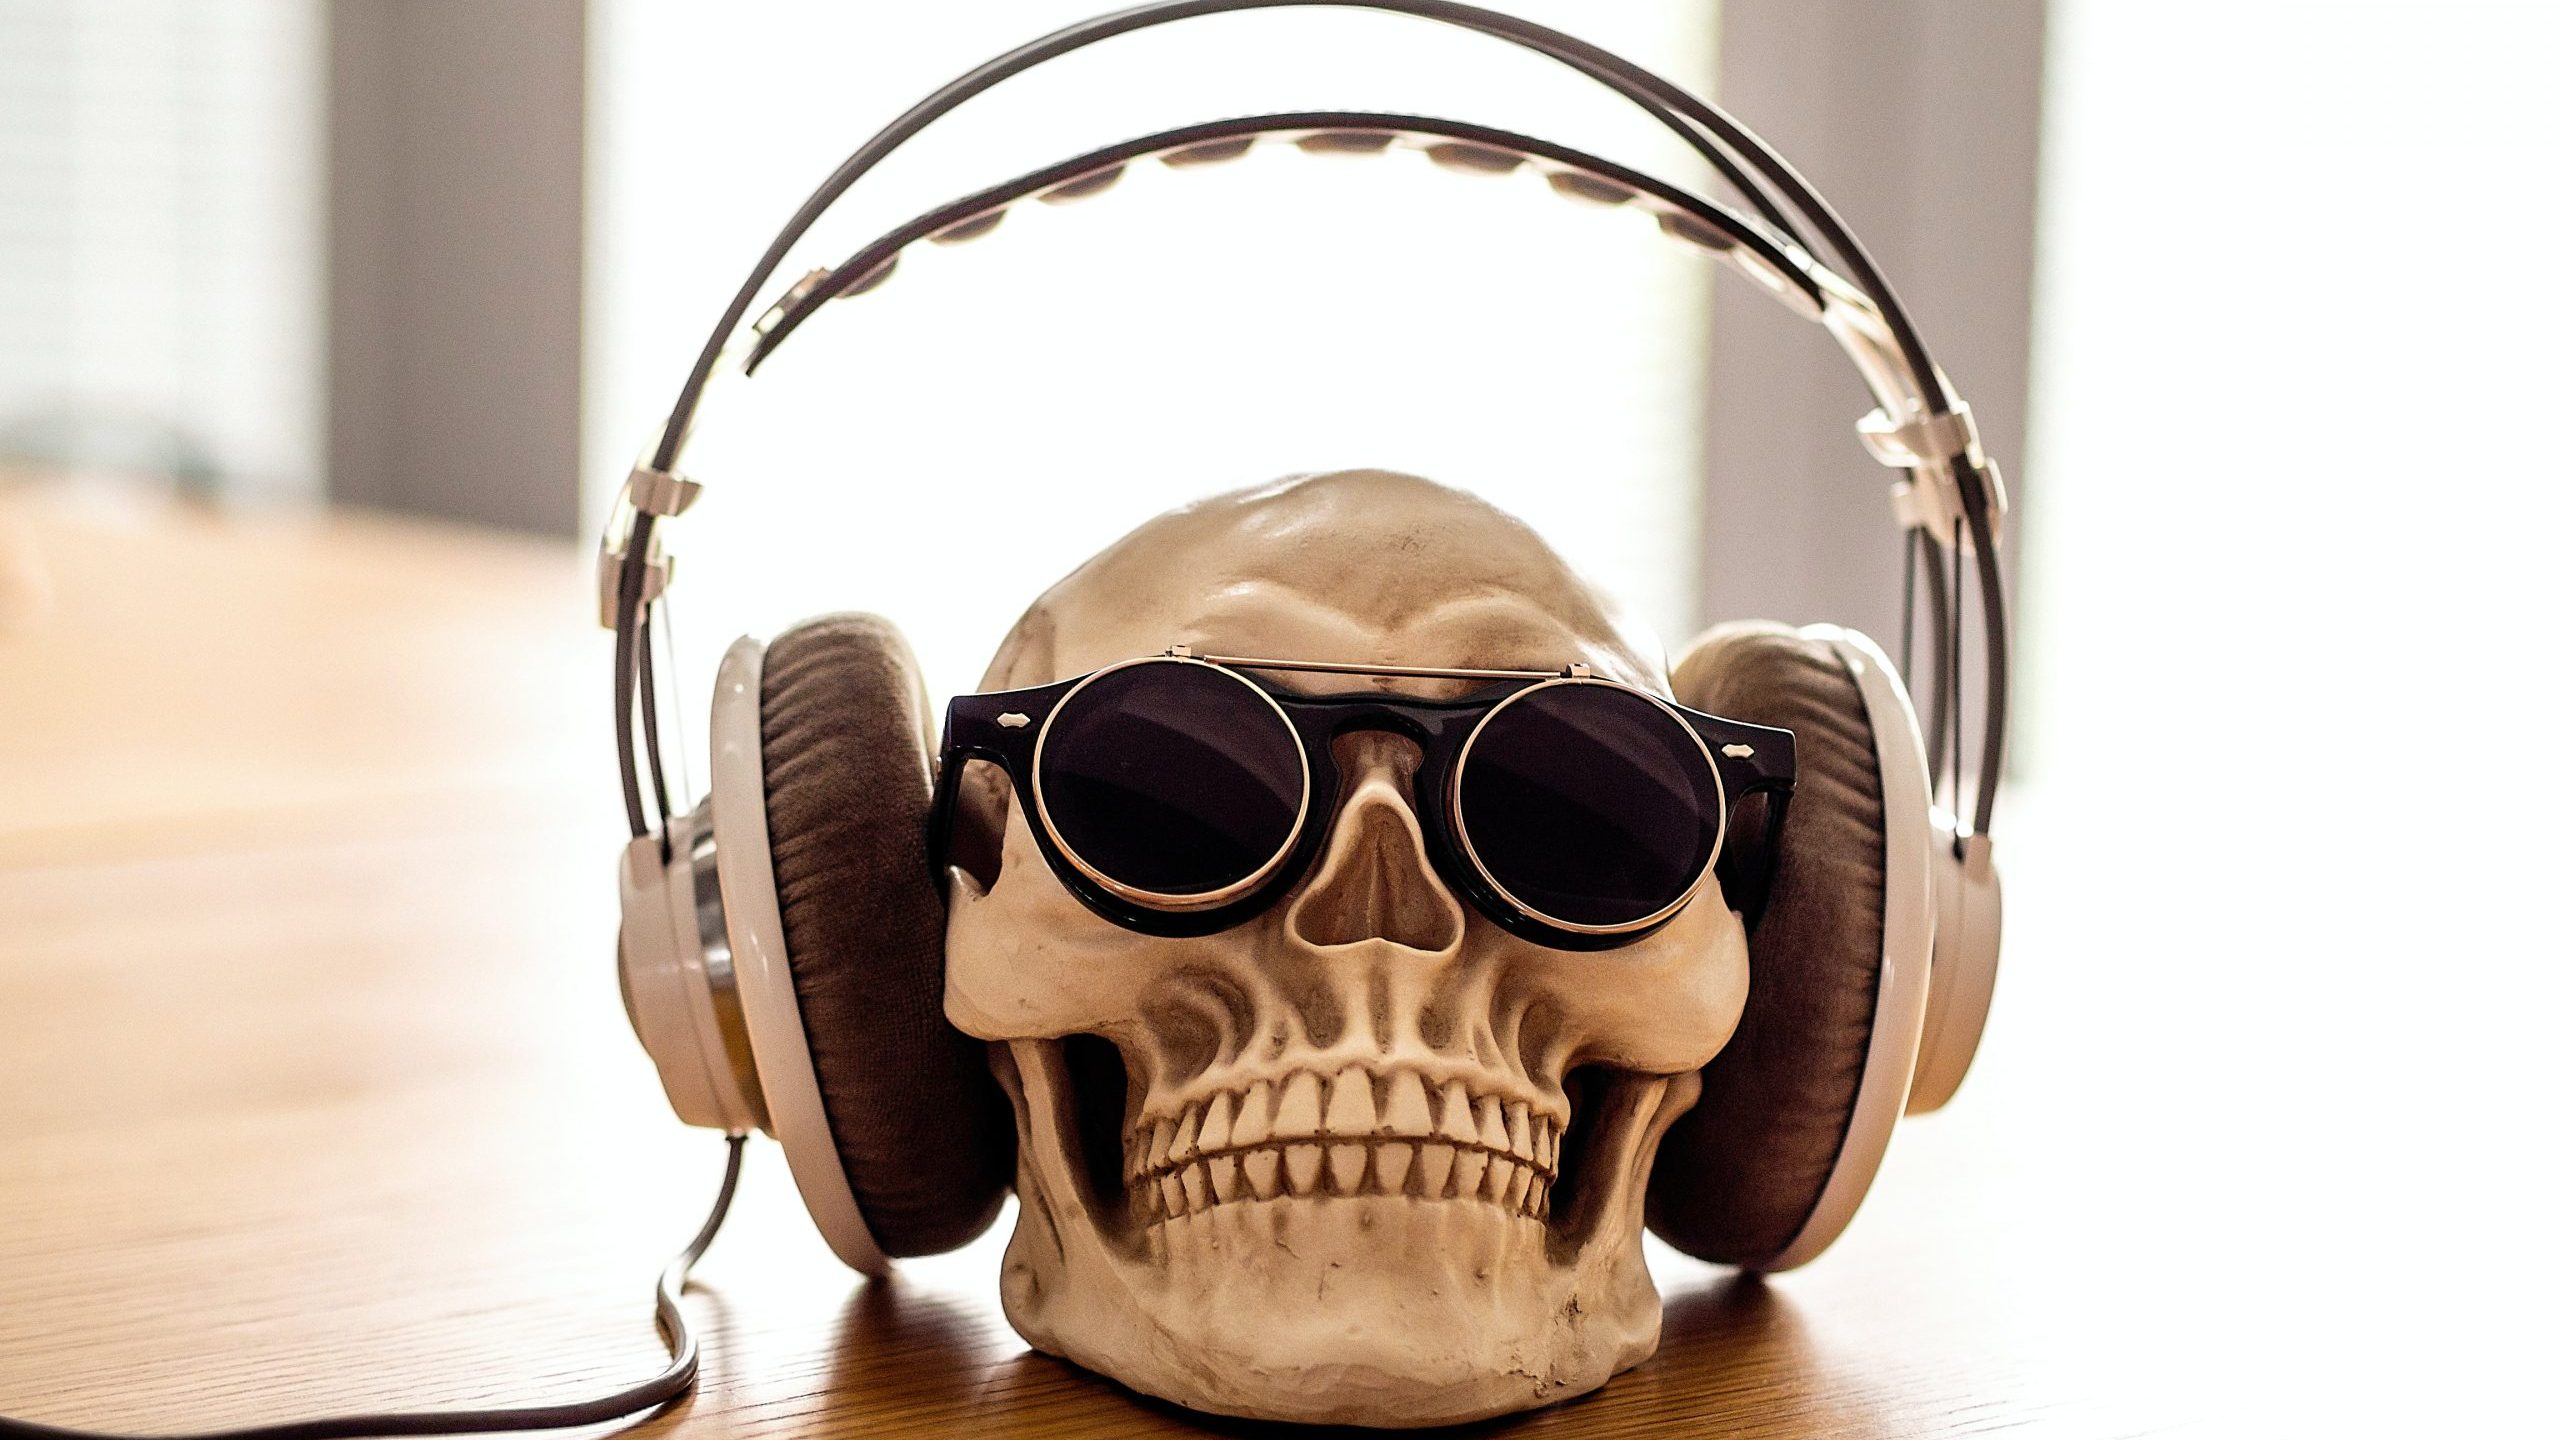 Human skull wearing headphones and dark glasses on a desk